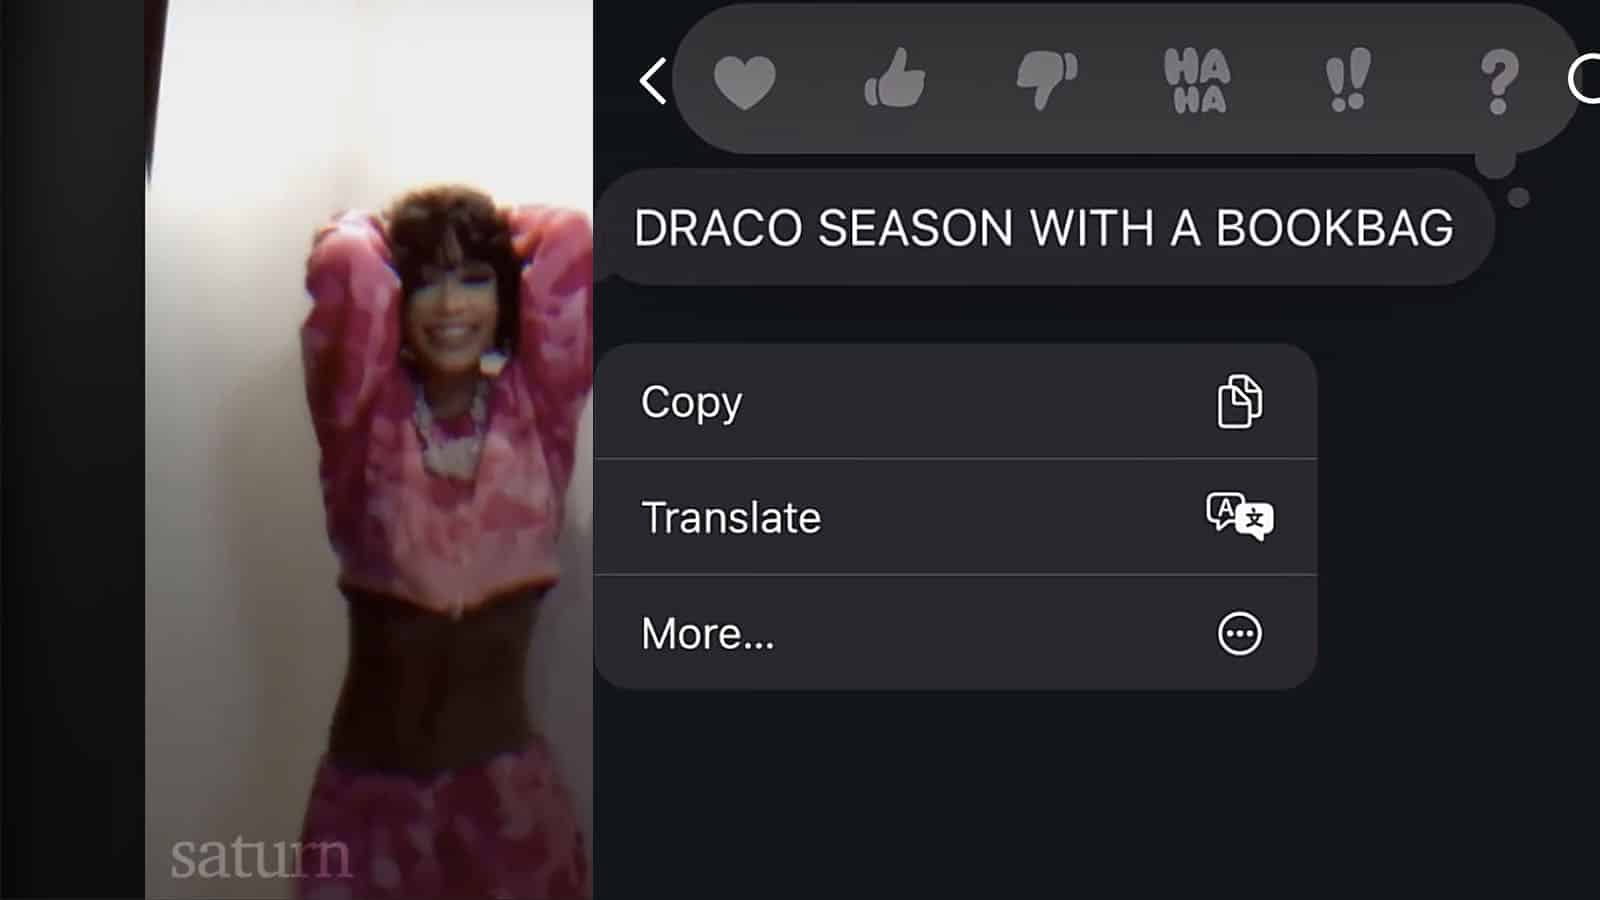 “Draco Season With the Bookbag viral trend on TikTok